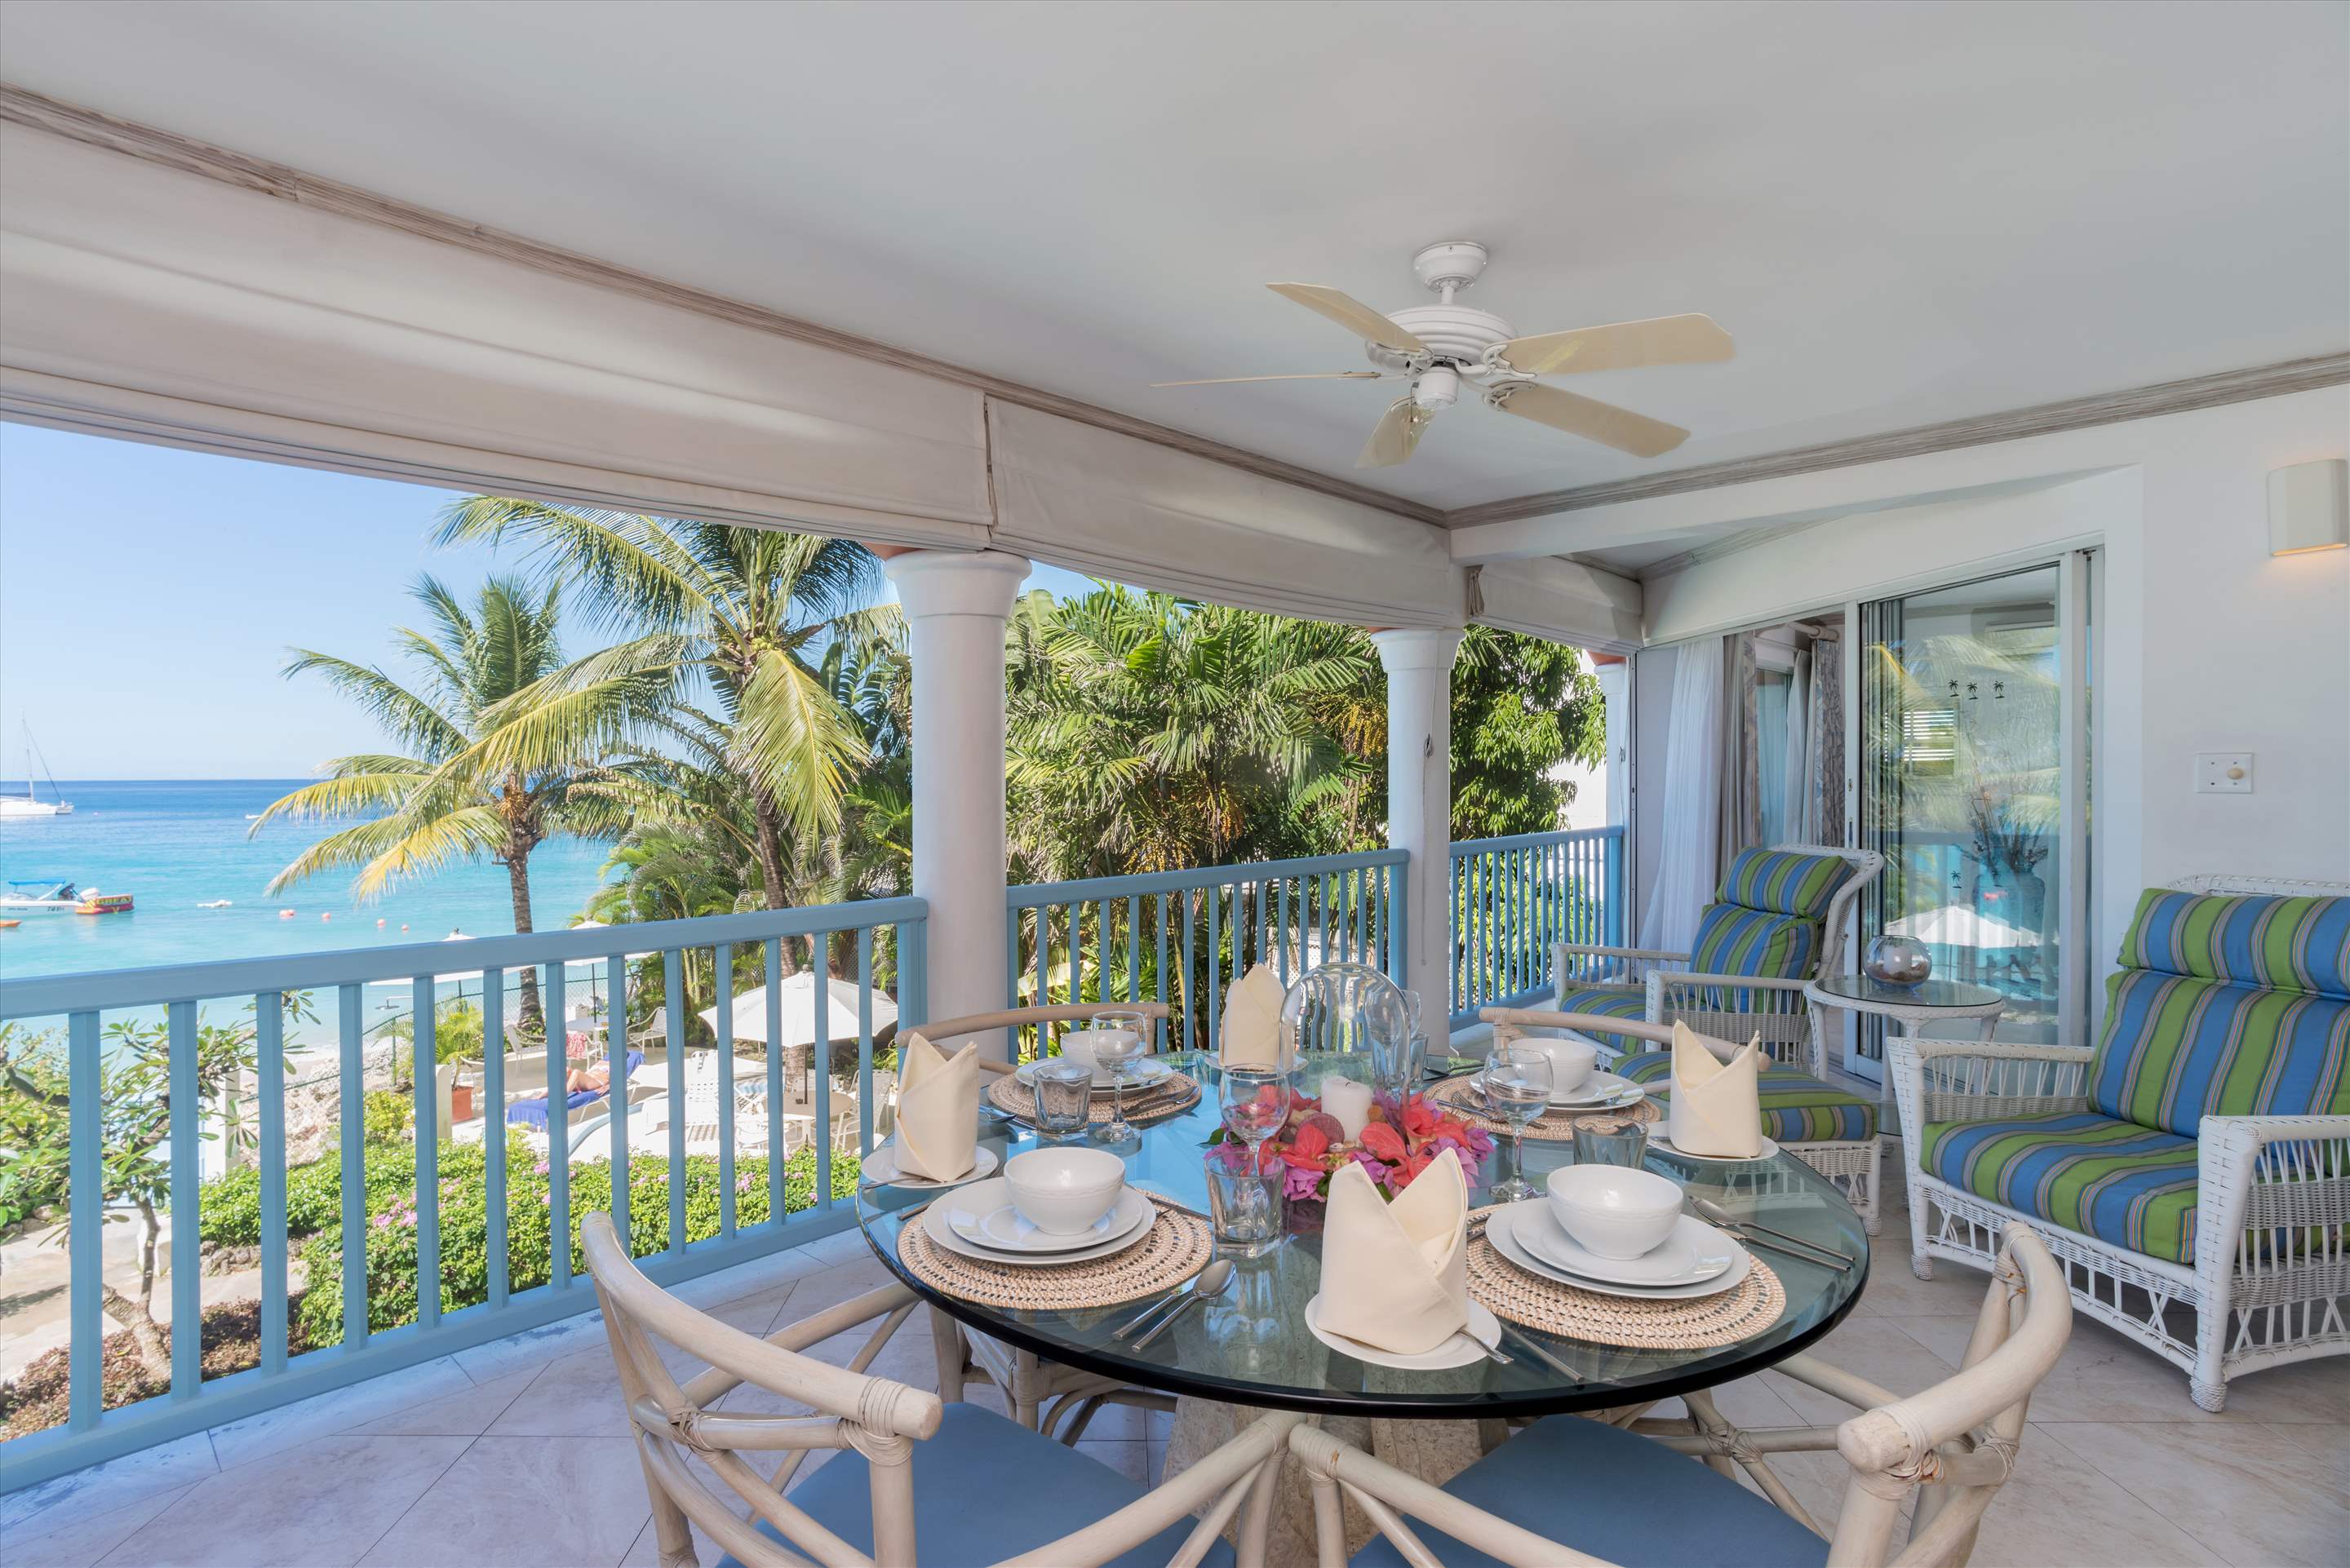 Villas on the Beach 205, 2 bedroom, 2 bedroom apartment in St. James & West Coast, Barbados Photo #3